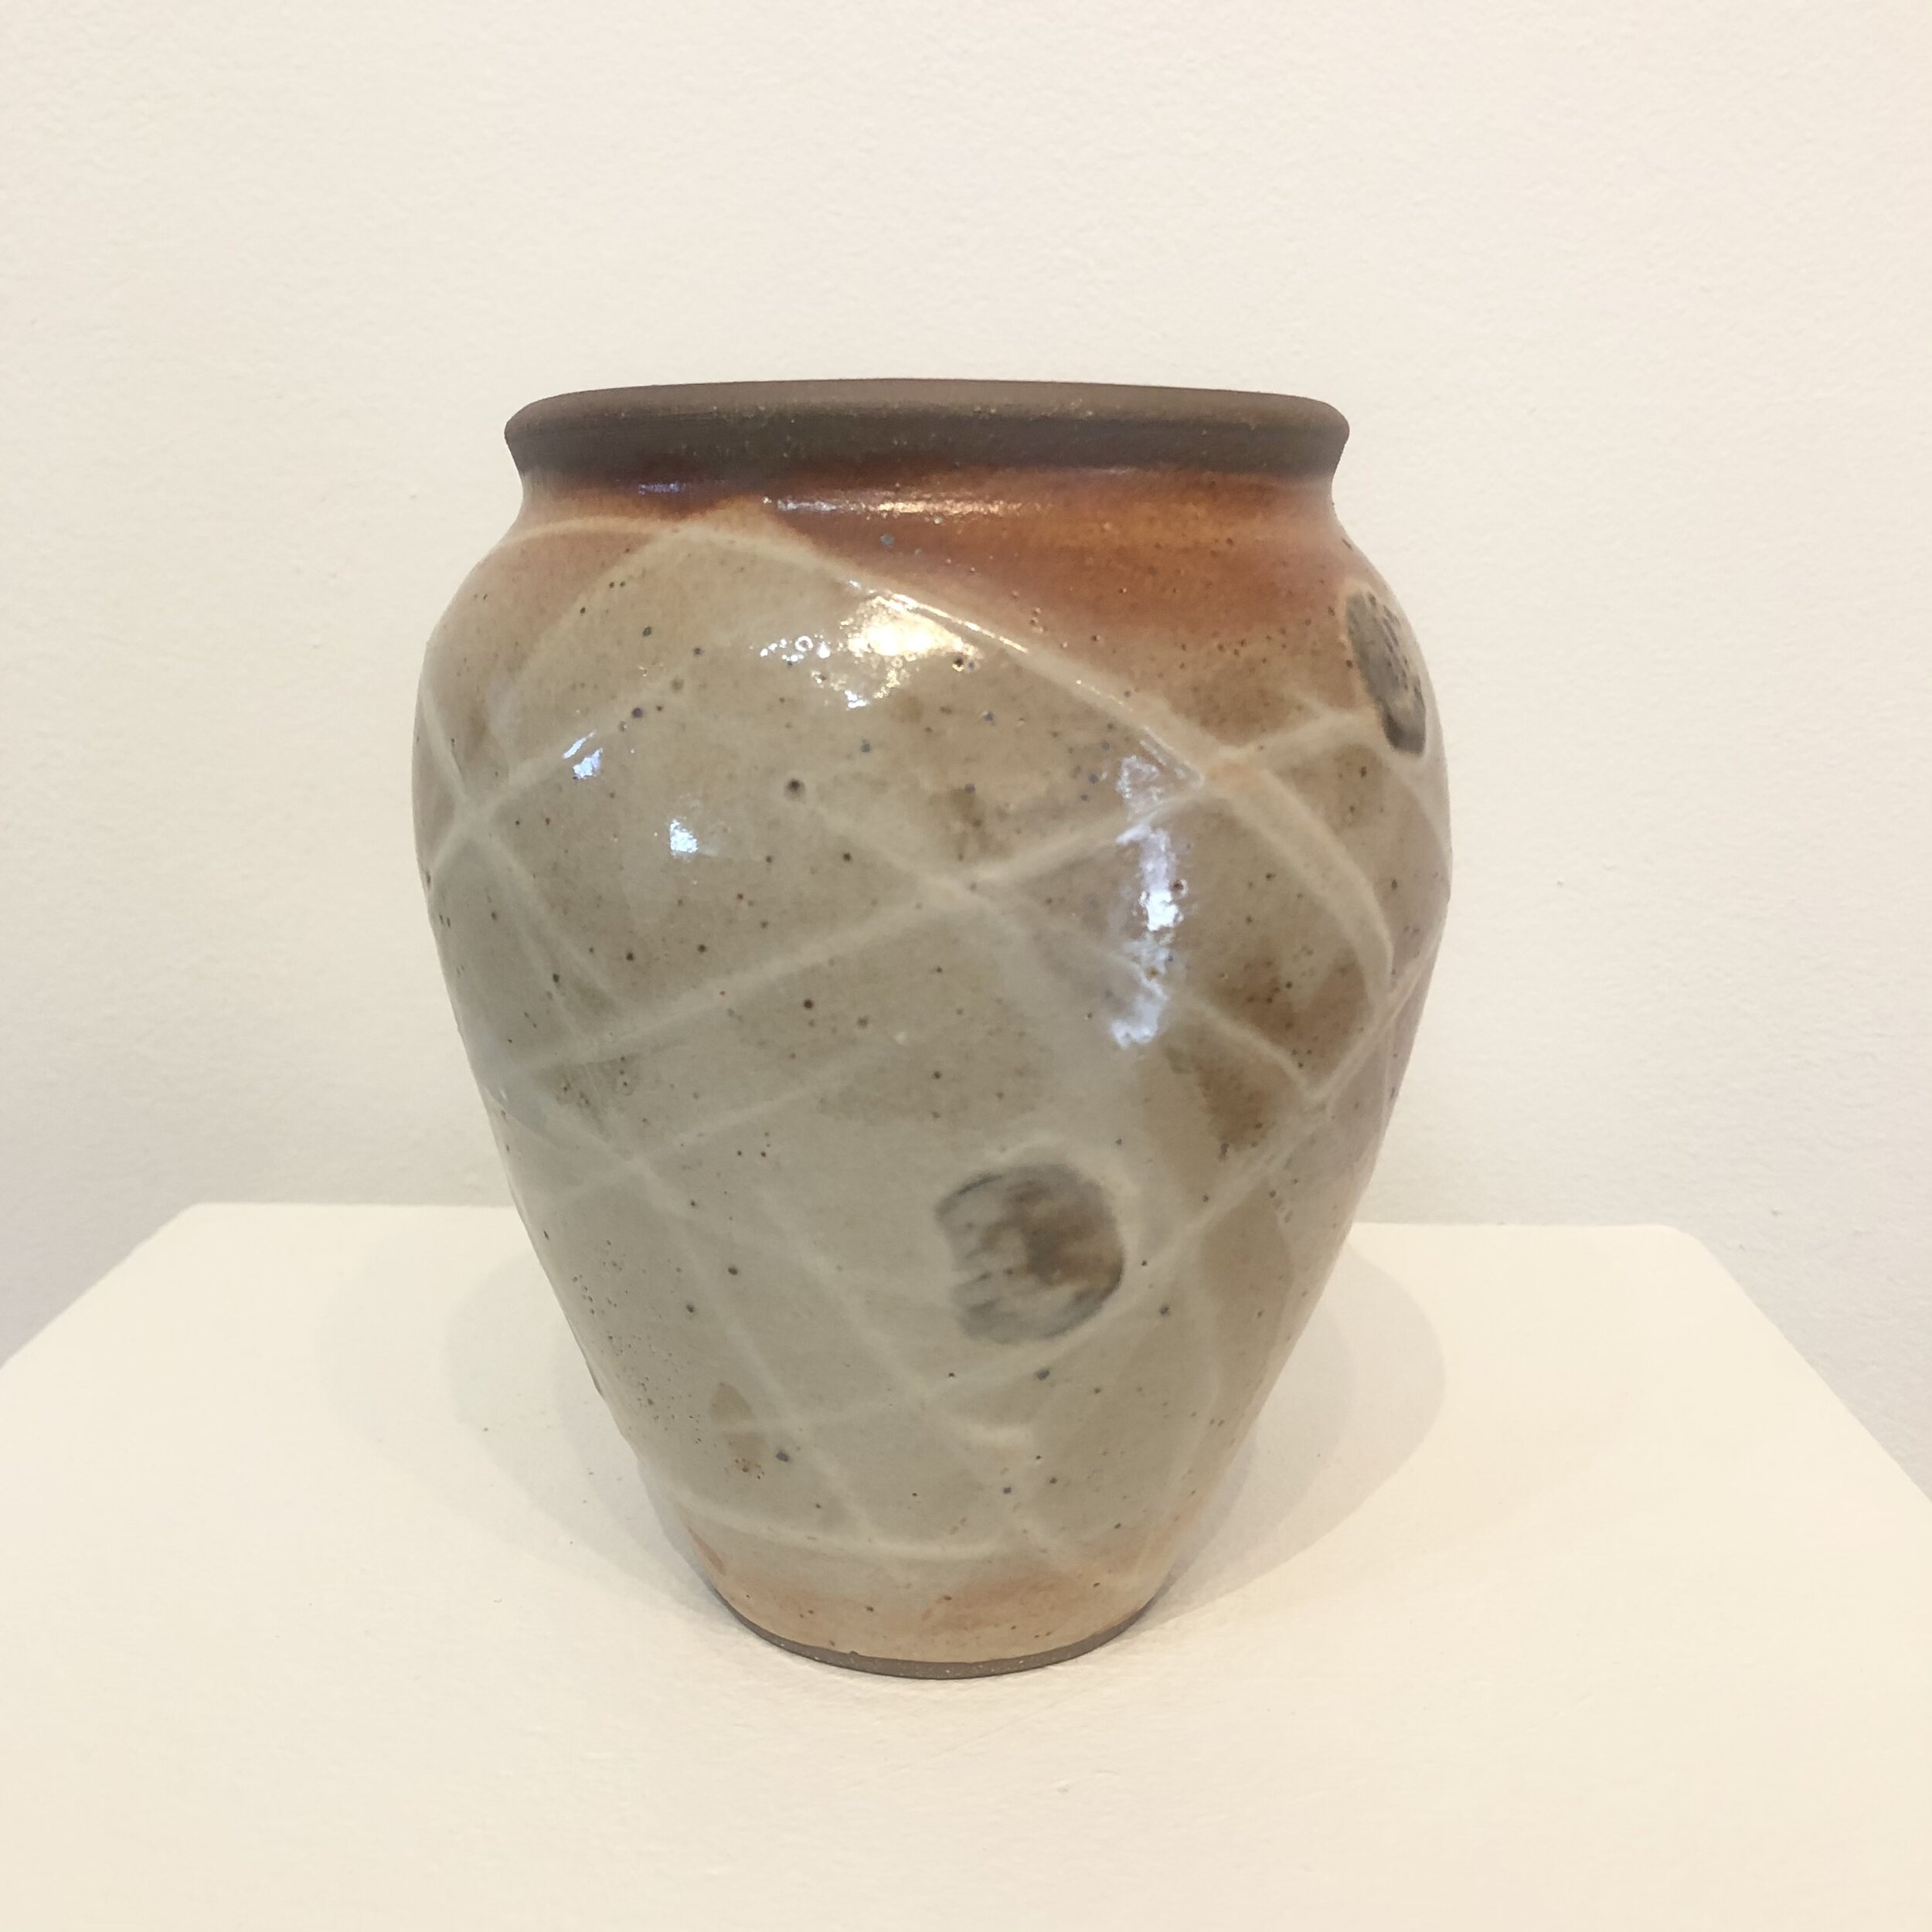  Stoneware vase 6 1/4” tall SOLD 